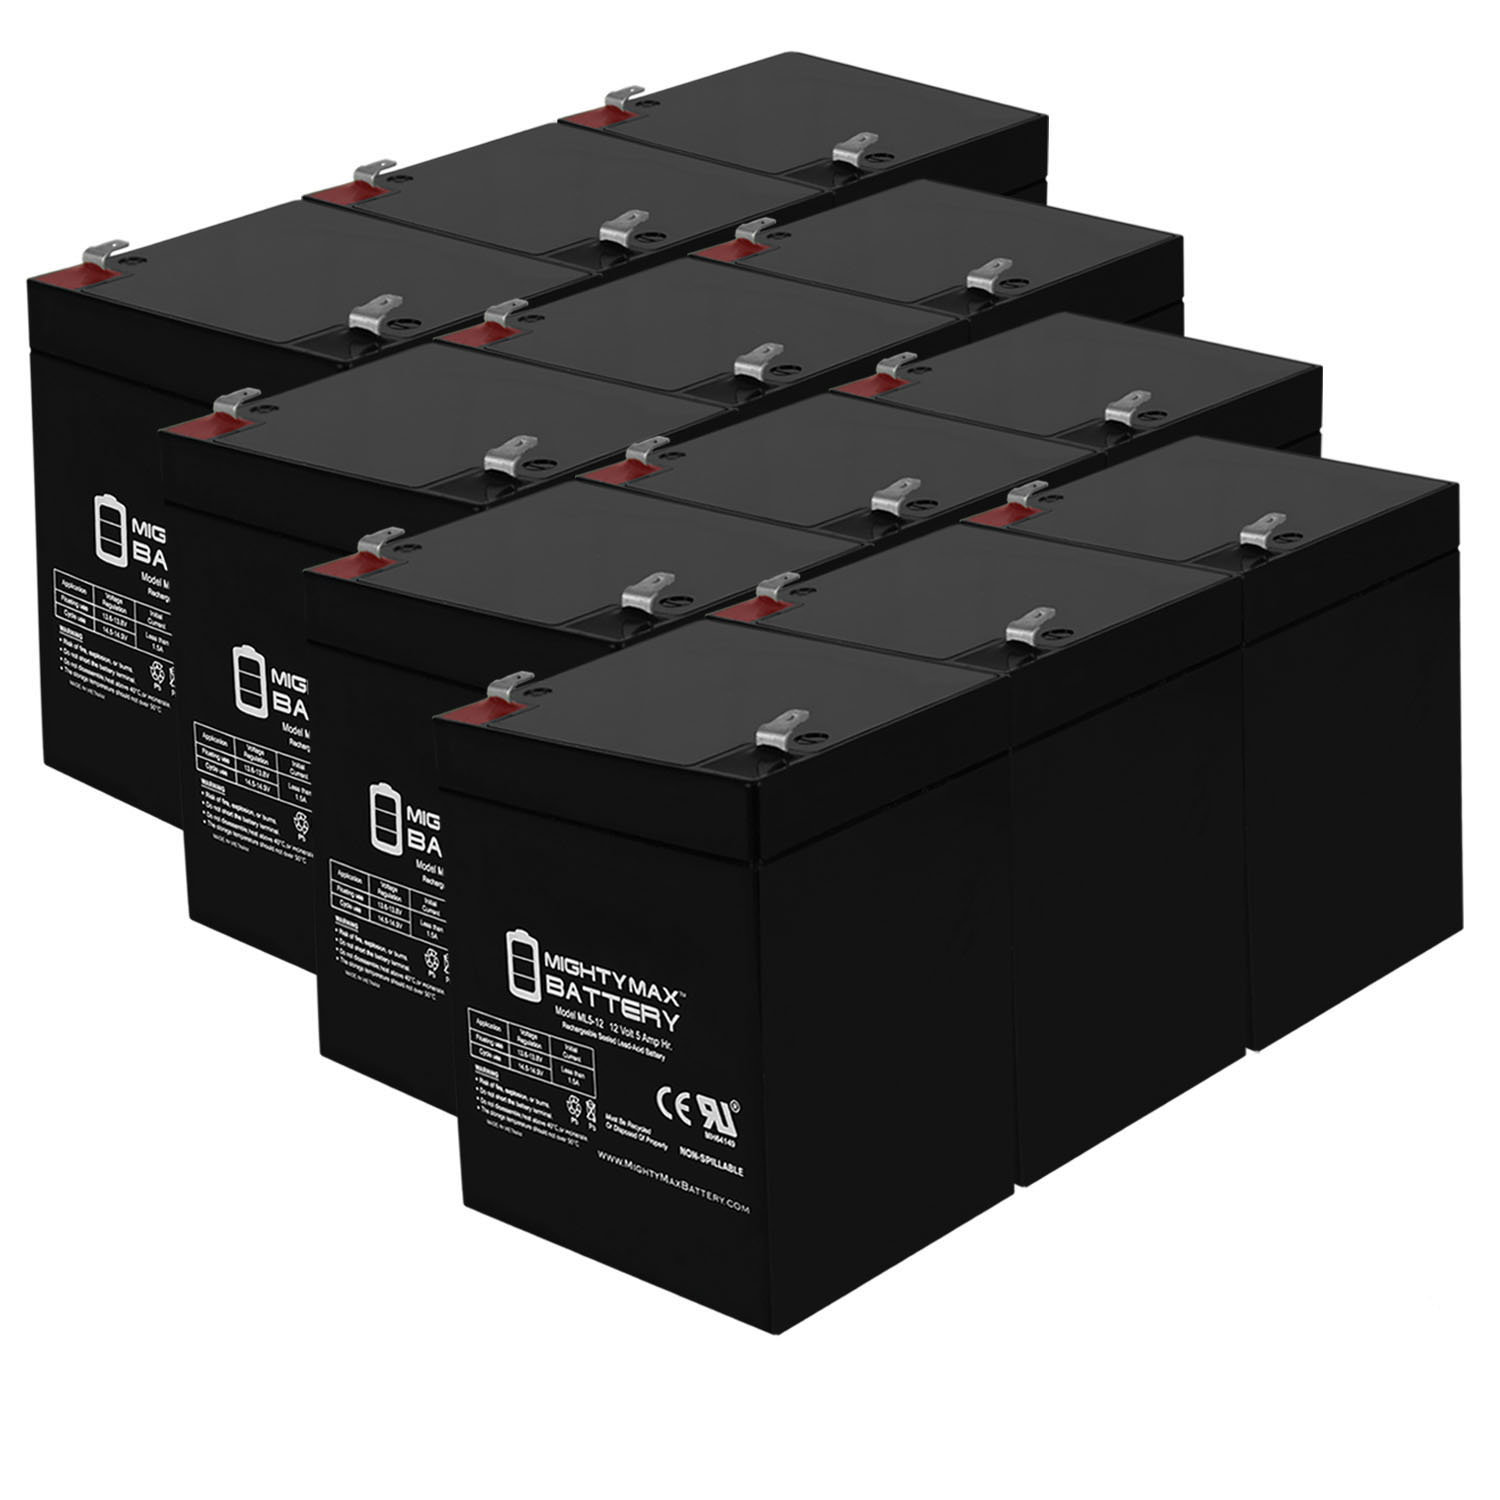 12V 5AH SLA Replacement Battery for Razor E100 Red 13111260 - 12 Pack